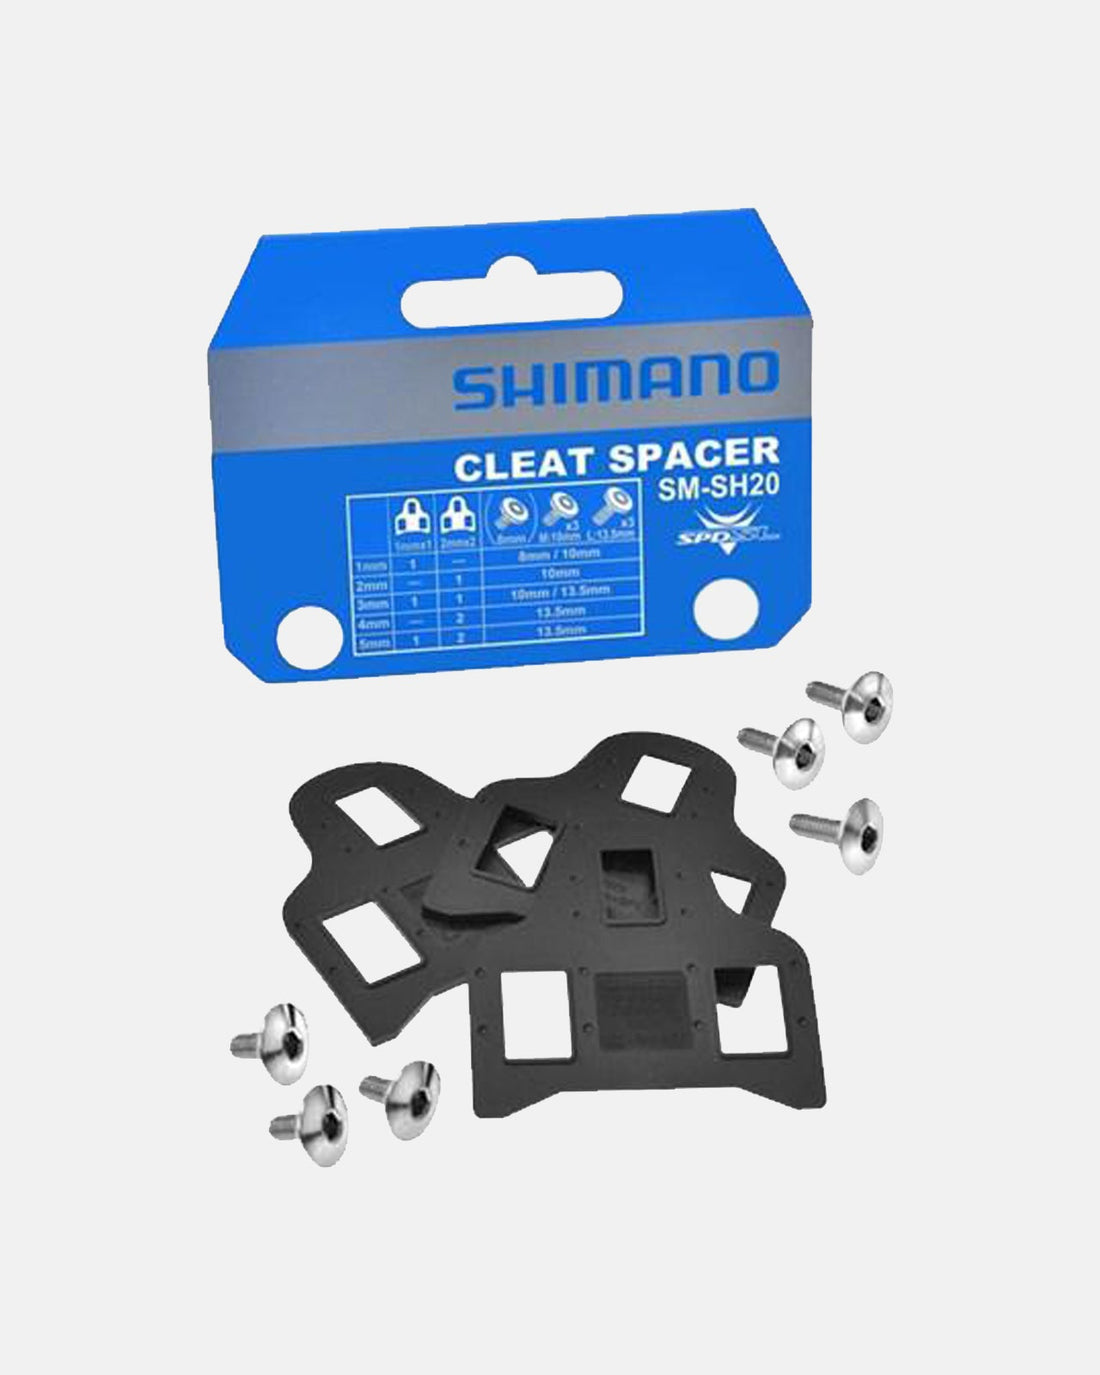 Shimano Cleat Spacer SM-SH20 set 1x1mm, 2x2mm - Shimano